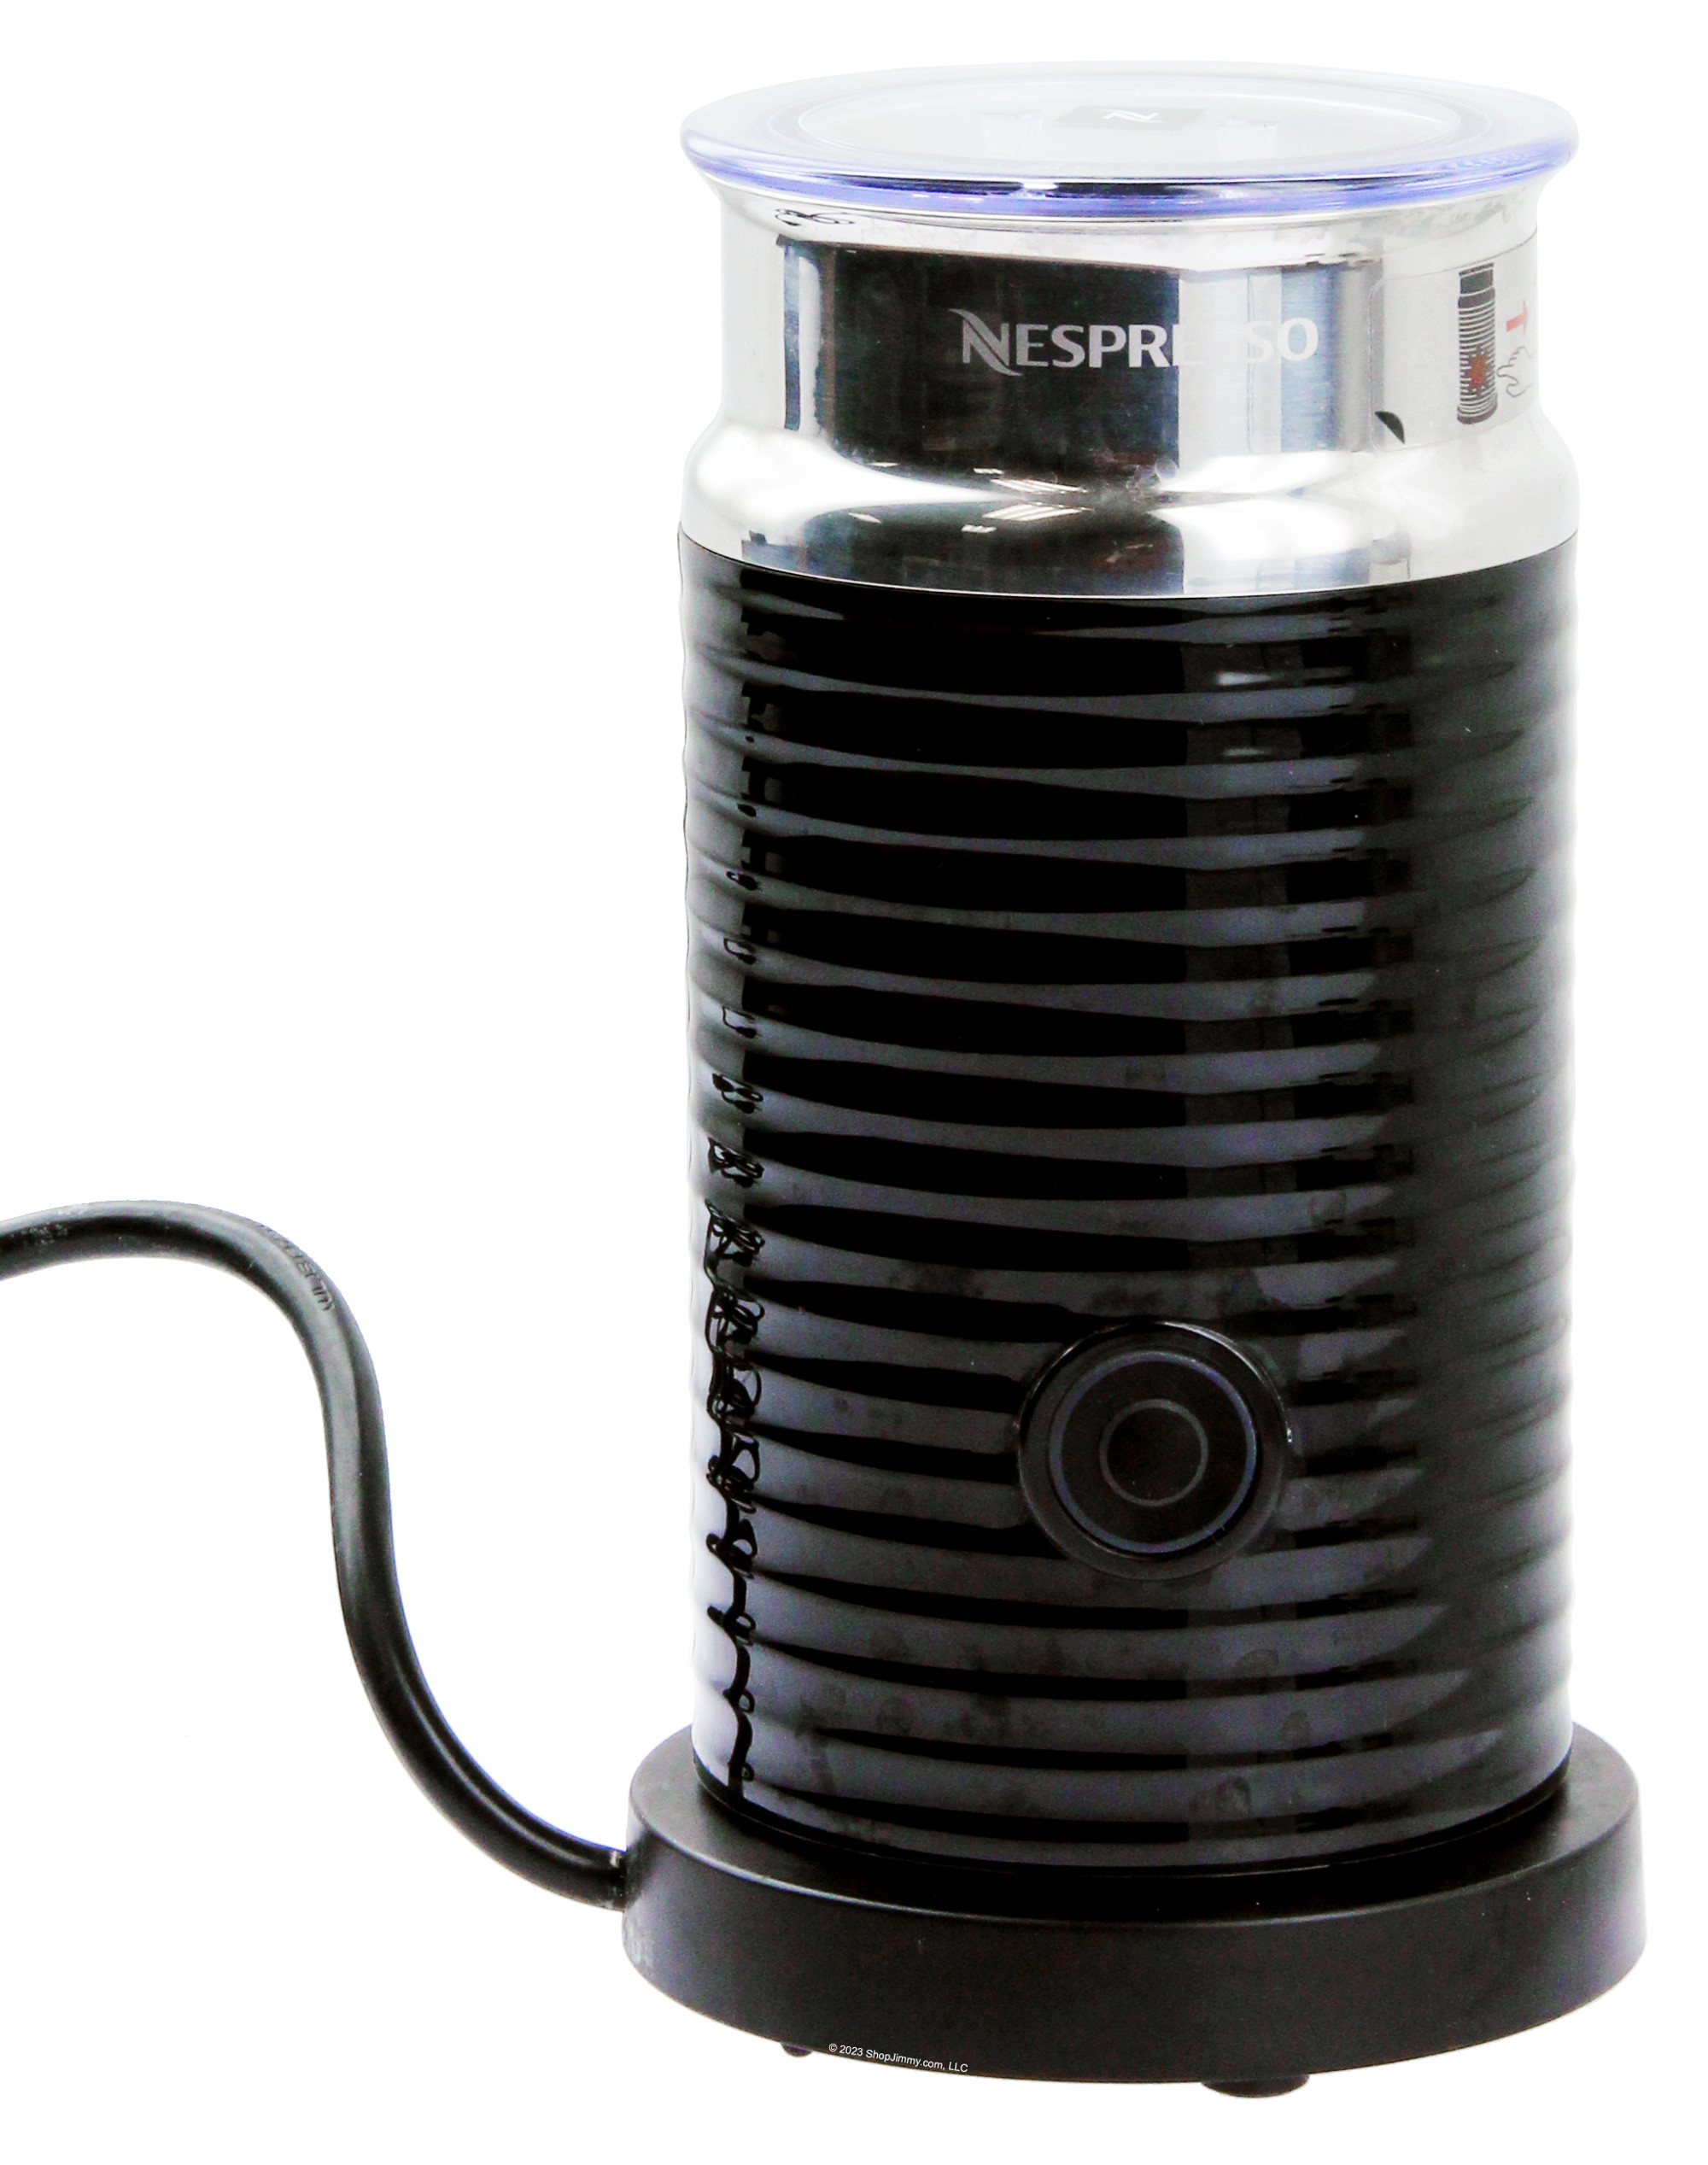 Nespresso Aeroccino 3 Electric Milk Frother - Black (3694-US-BK)